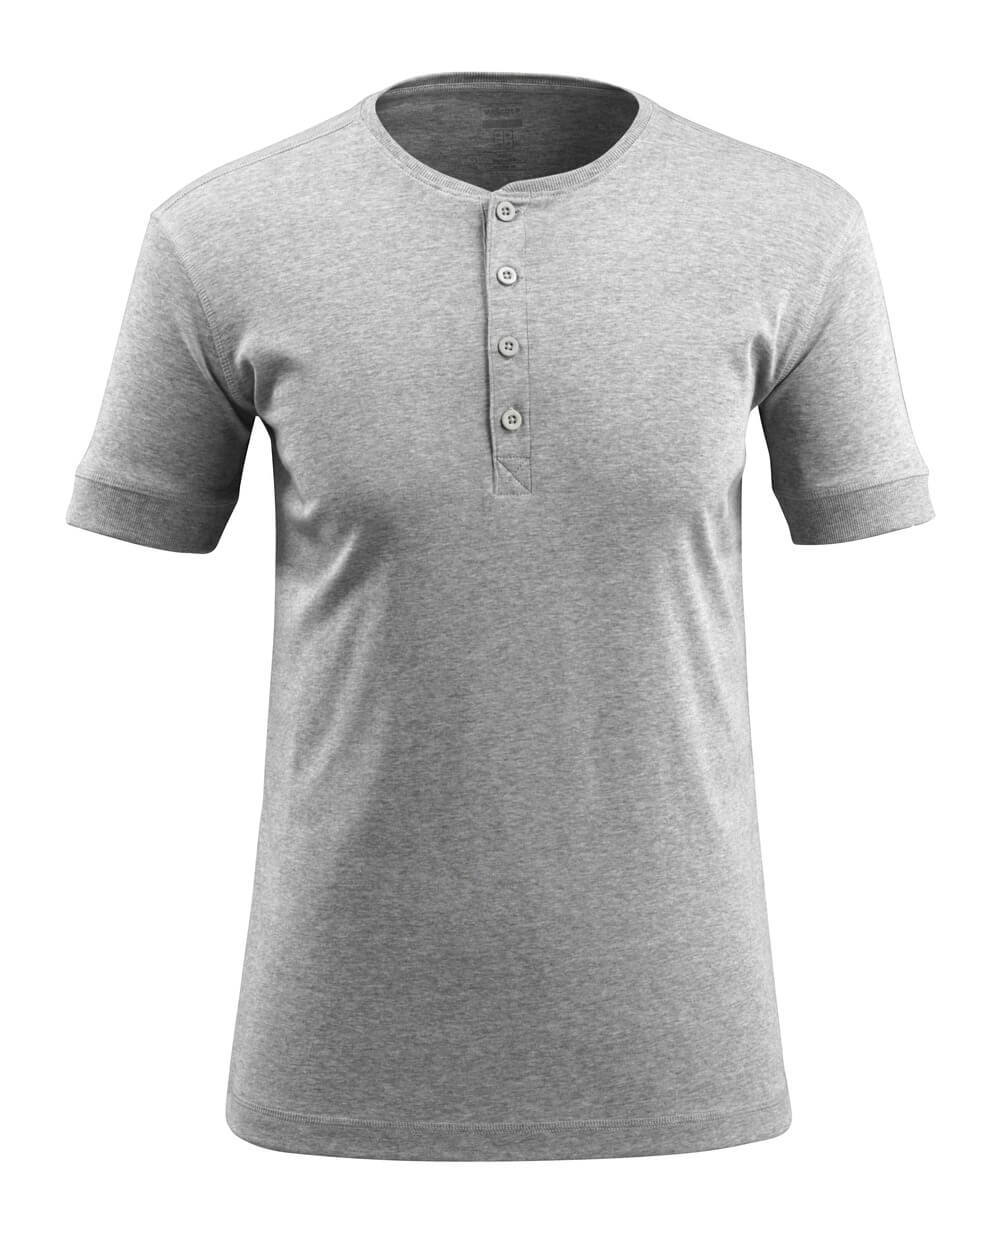 50582-964-08 T-shirt - grey-flecked